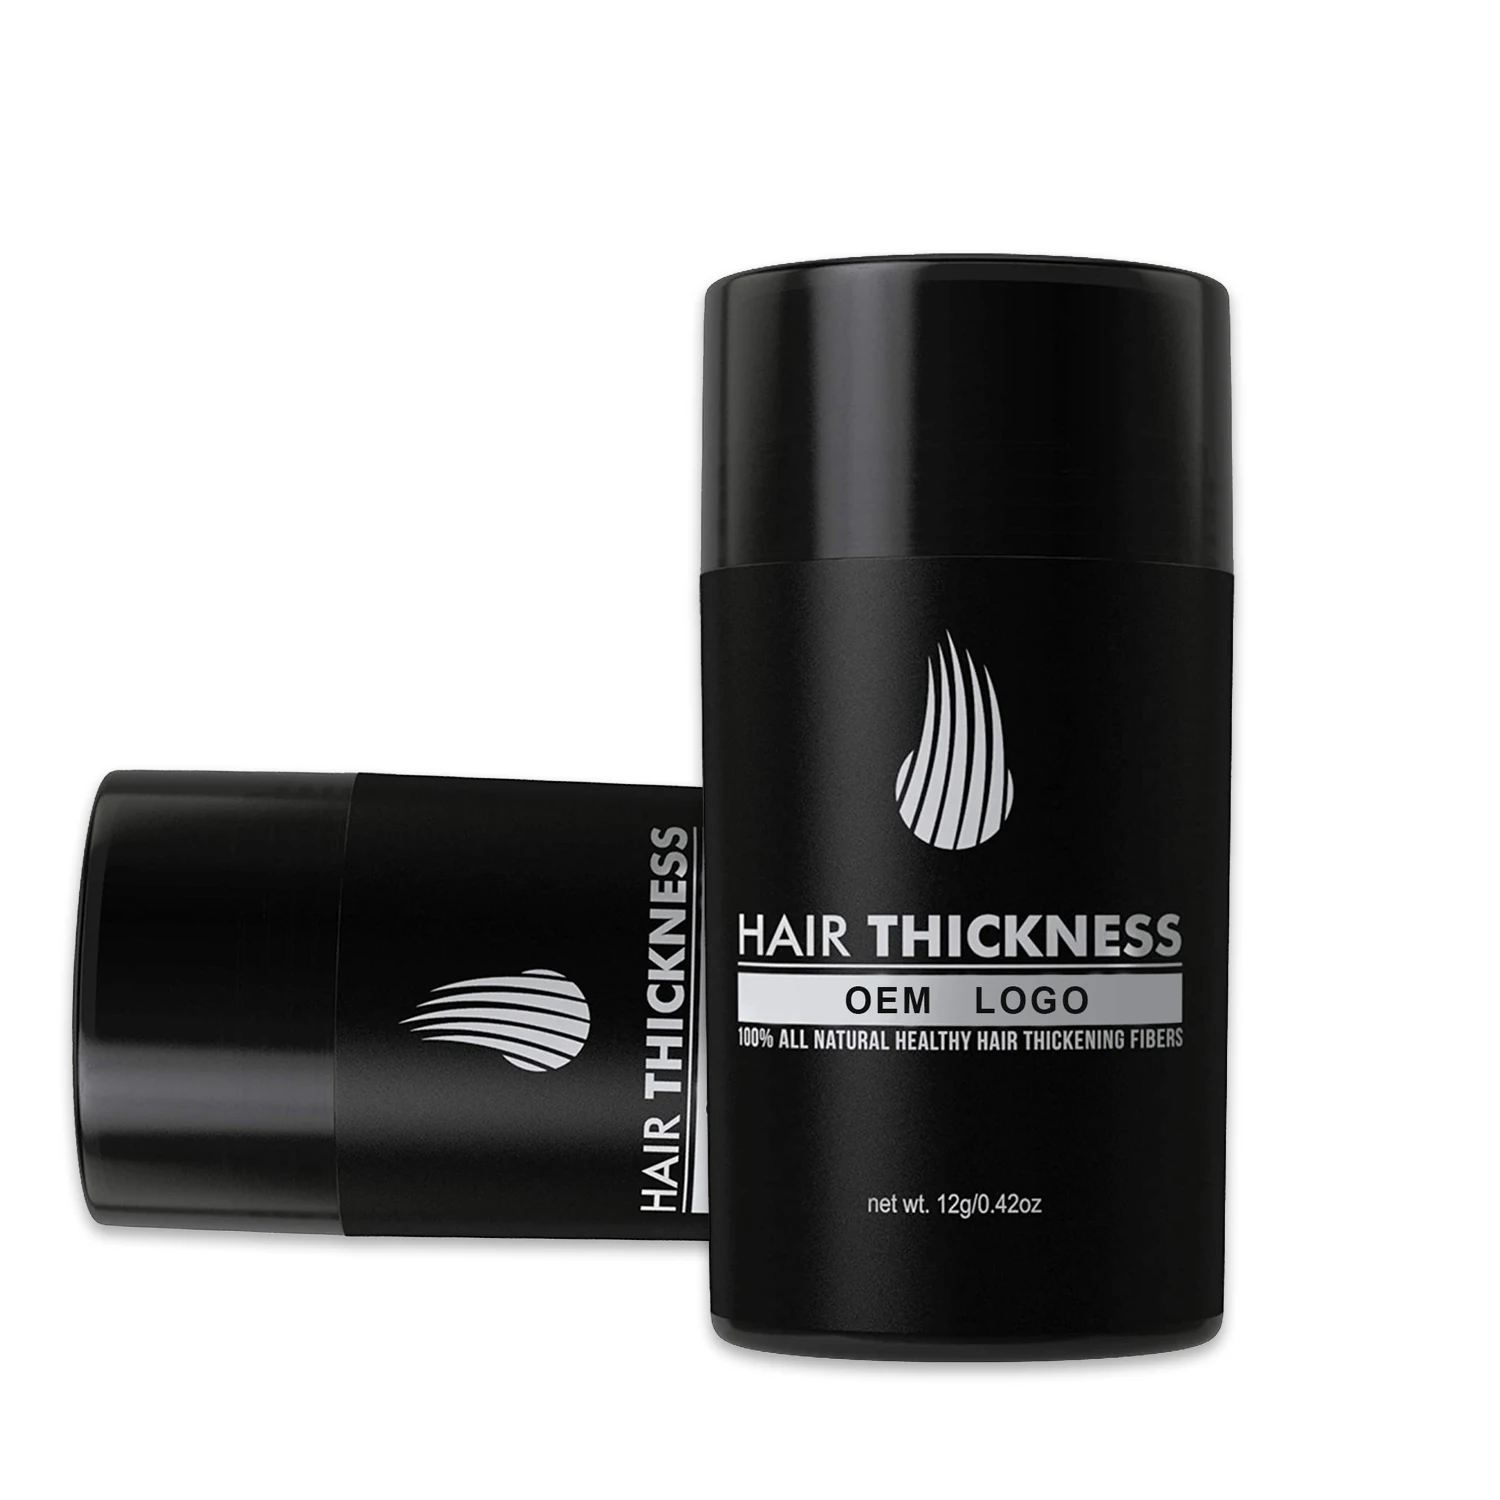 Amazon Hot Salebuilding Fibers Hair 12g Black Hair Fiber Using For Hair  Loss - Buy Hair Building Fiber,Hair Fiber,Hair Growth Fiber Product on  